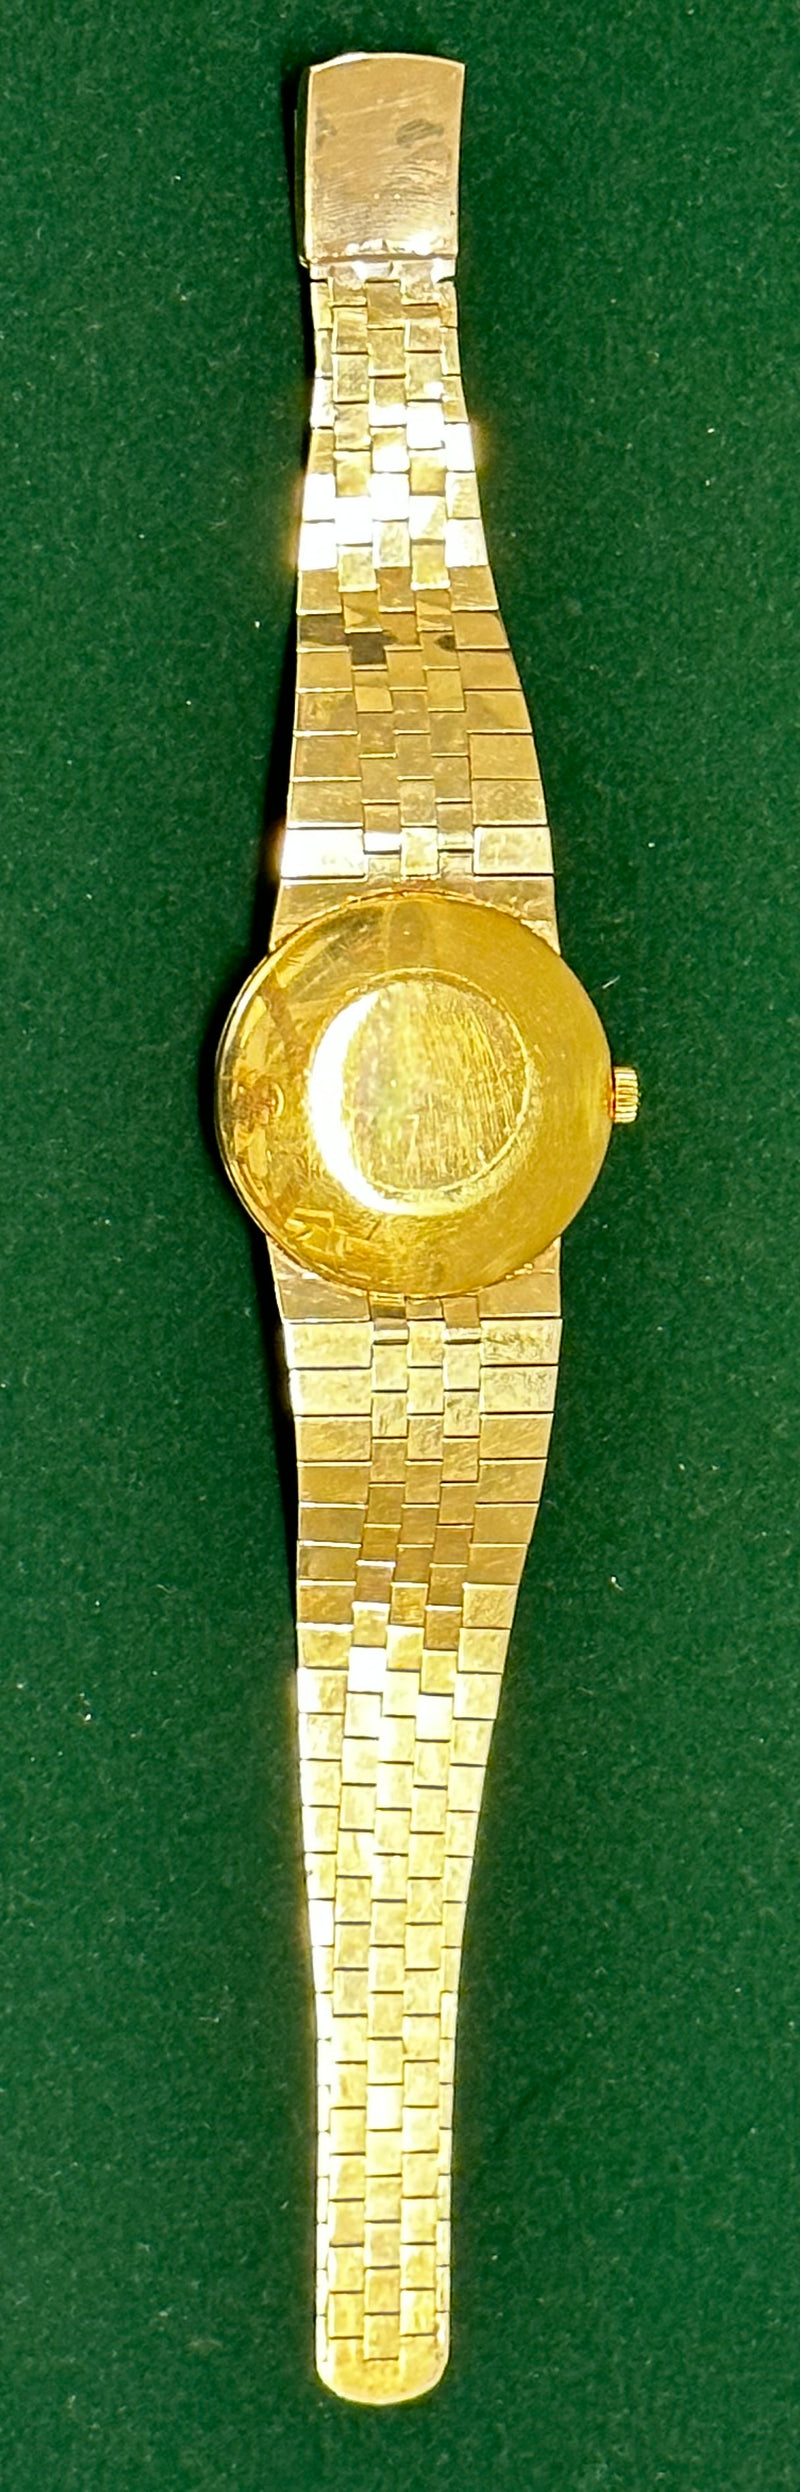 PATEK PHILIPPE Vintage 1940's Solid 18K Yellow Gold Rare Wristwatch - $60K Appraisal Value! ✓ APR 57